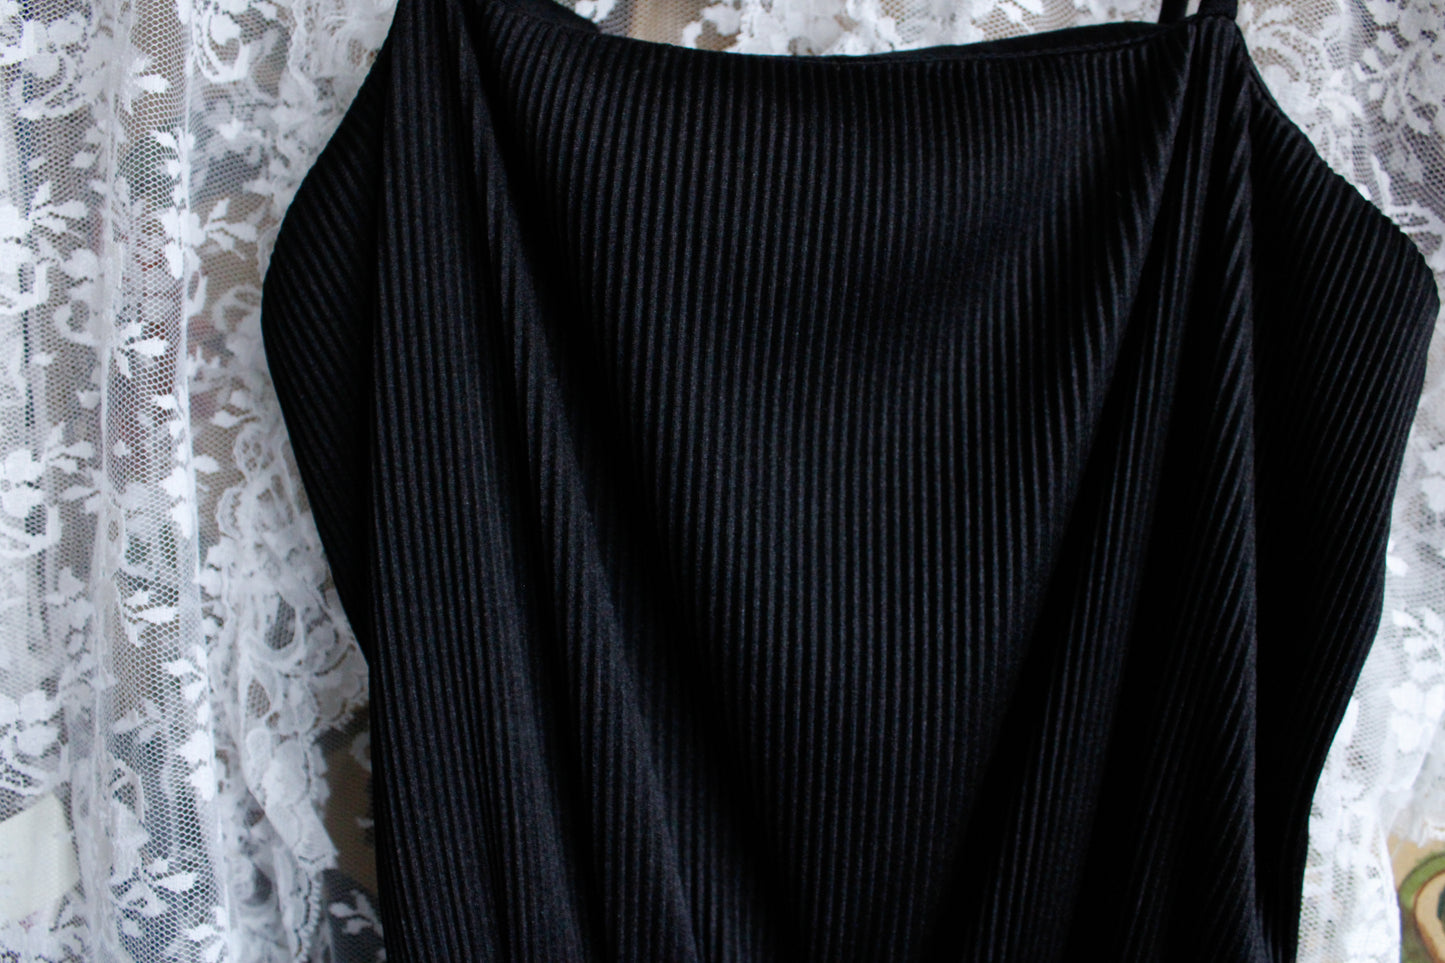 1970s Simple Jersey Black Dress